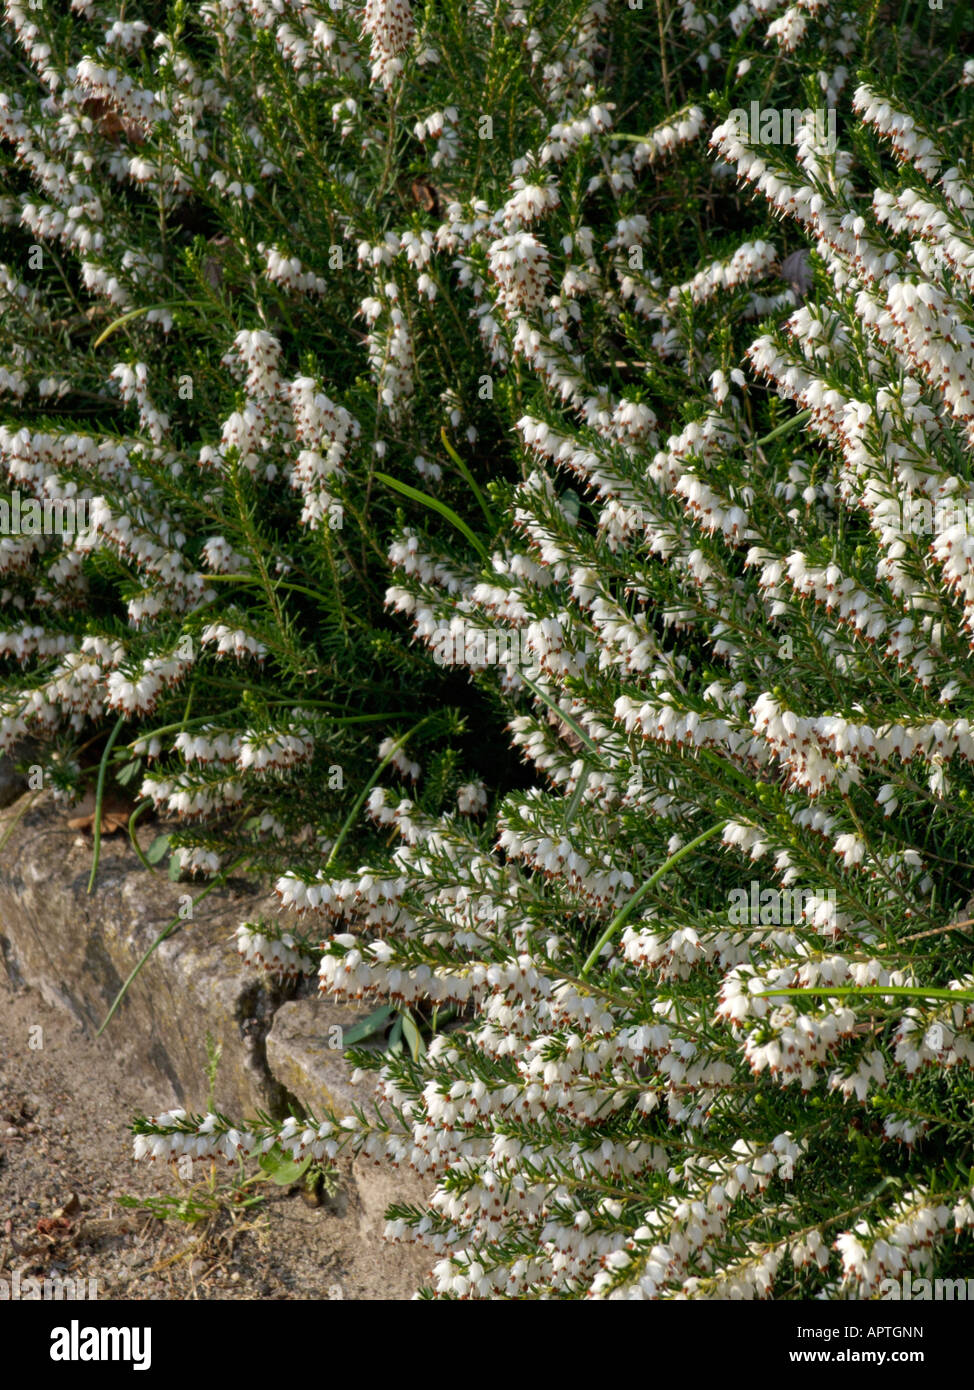 Winter heather (Erica carnea 'Snow Queen' syn. Erica herbacea 'Snow Queen') Stock Photo